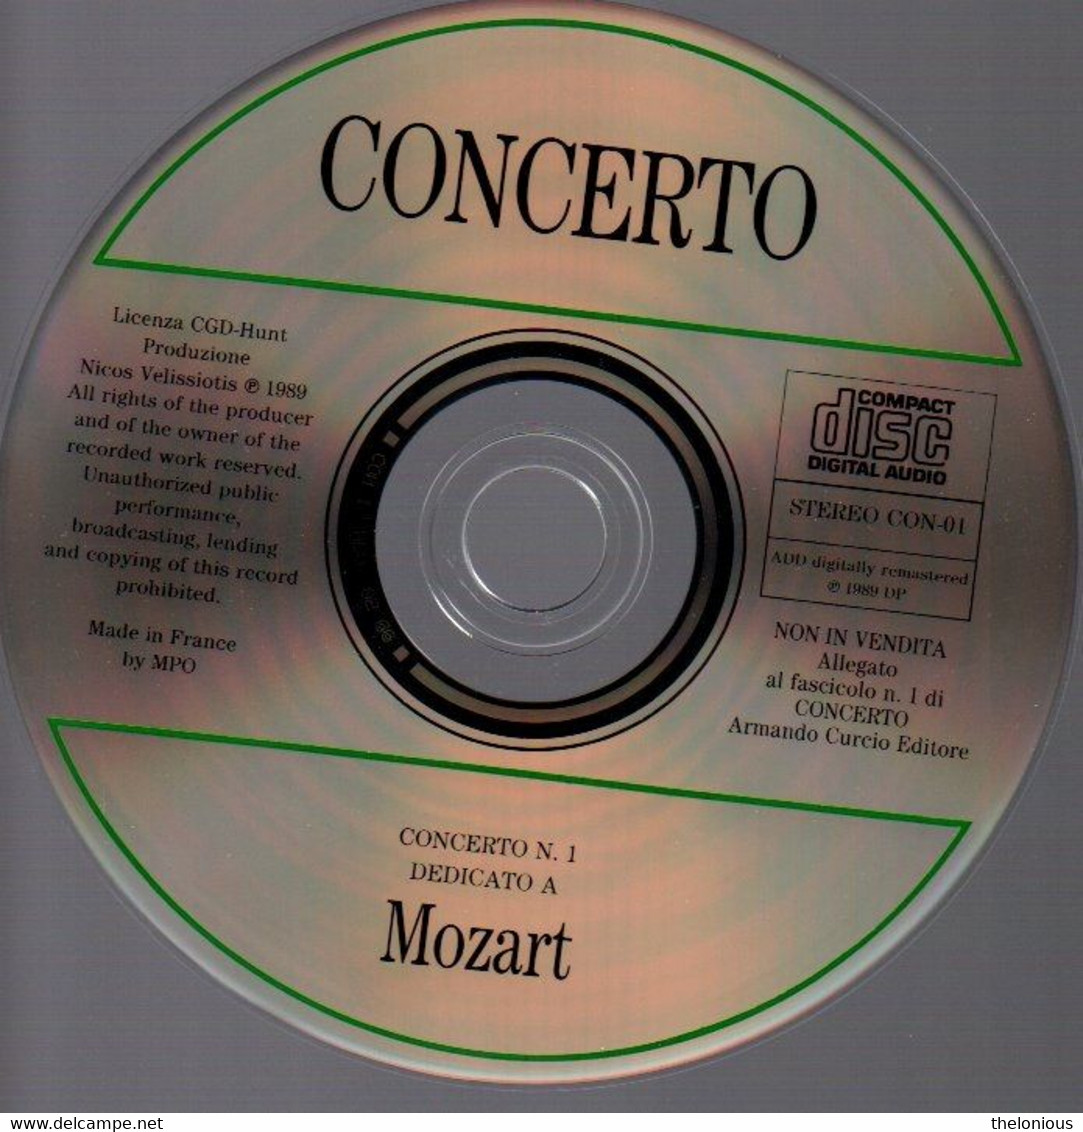 # CD: W.A. Mozart - Ouvertue K.527, Serenata K.525, Concerto K.466, Sinfonia K.550 - Klassik